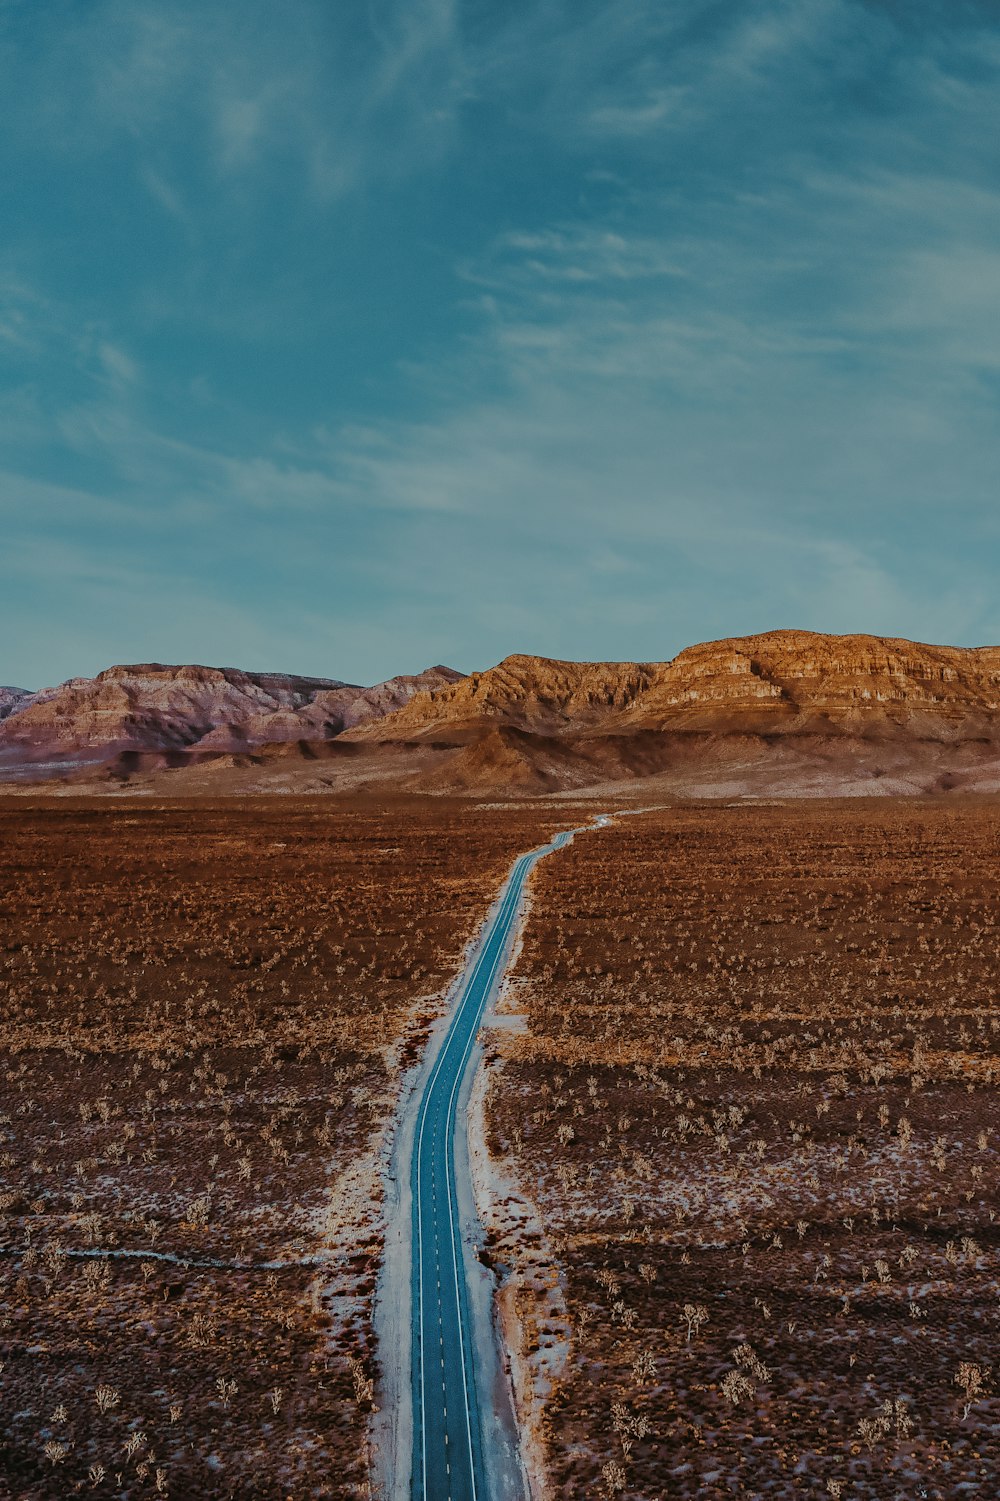 estrada de asfalto cinza entre montanhas marrons sob o céu azul durante o dia